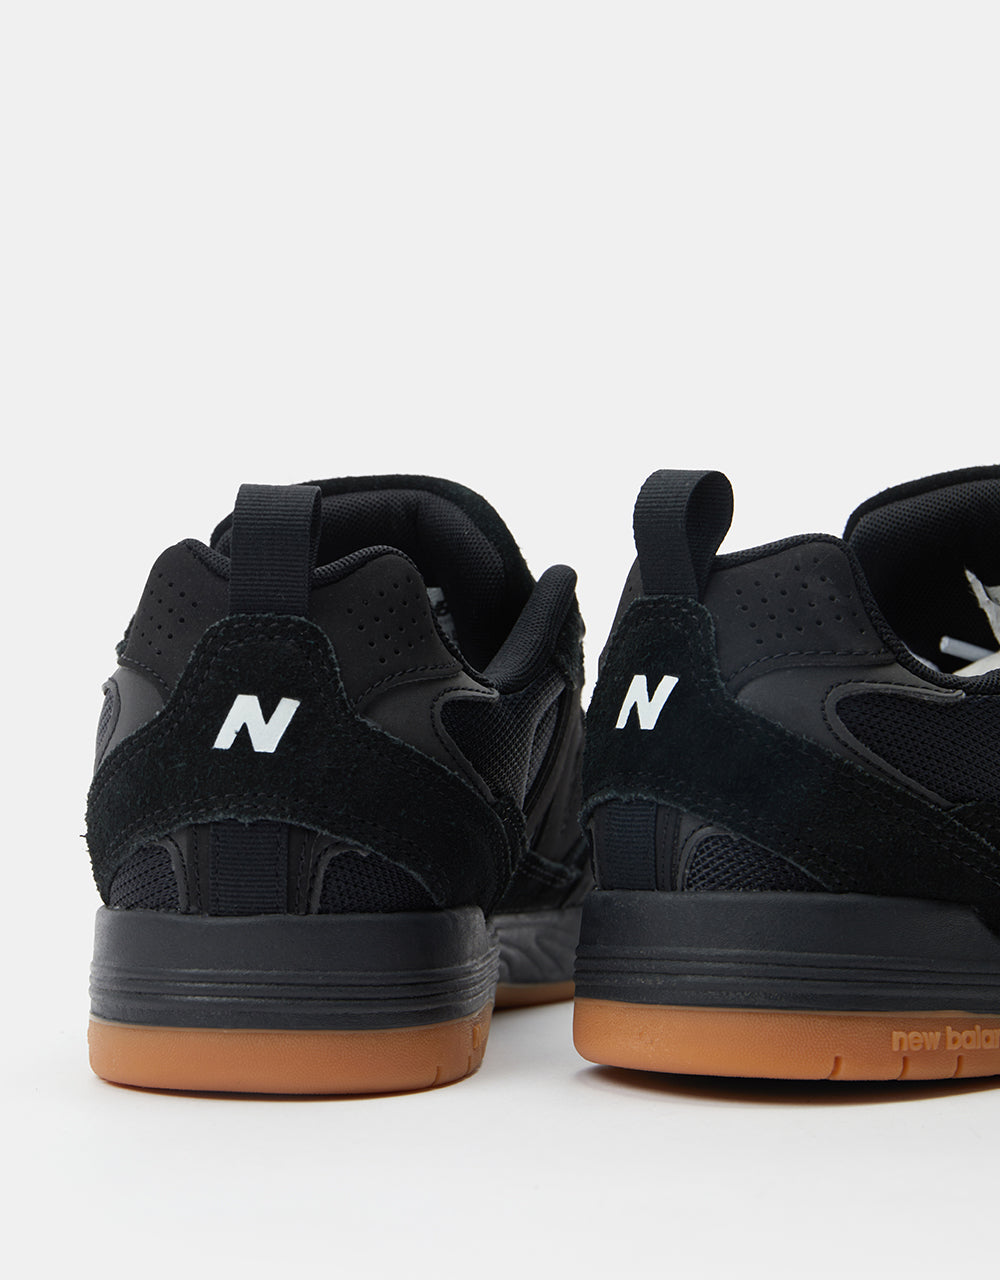 New Balance Numeric 808 Skate Shoes - Black/Gum